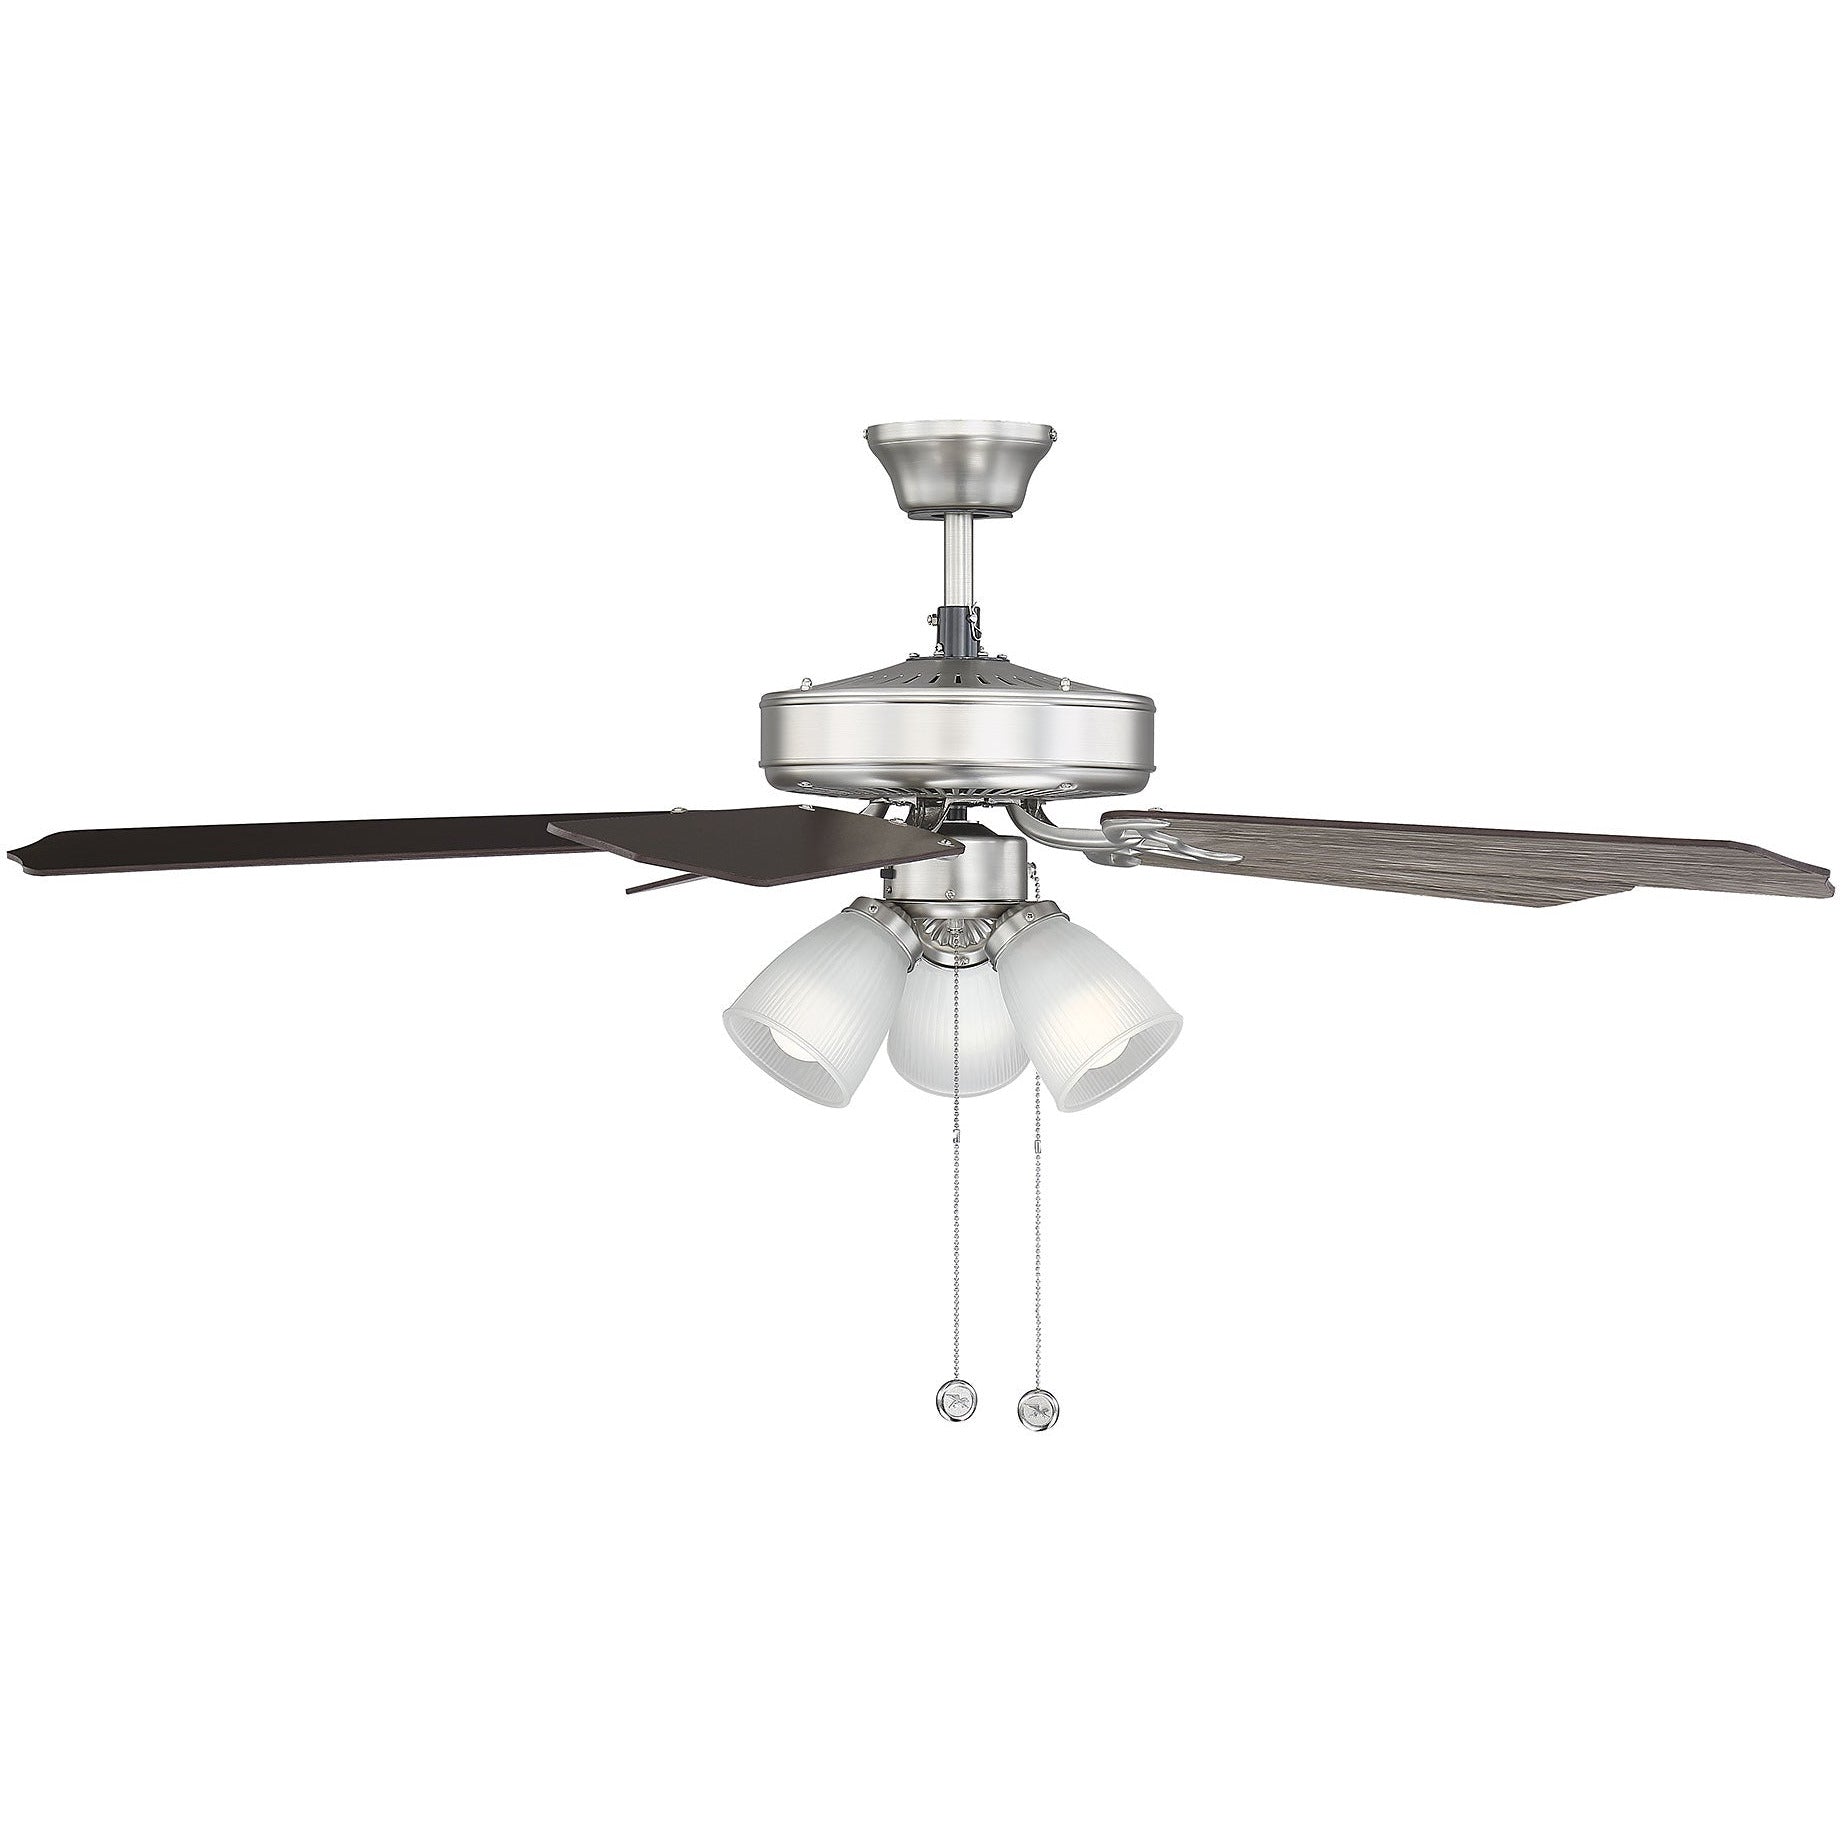 First Value 52" 3-Light Ceiling Fan